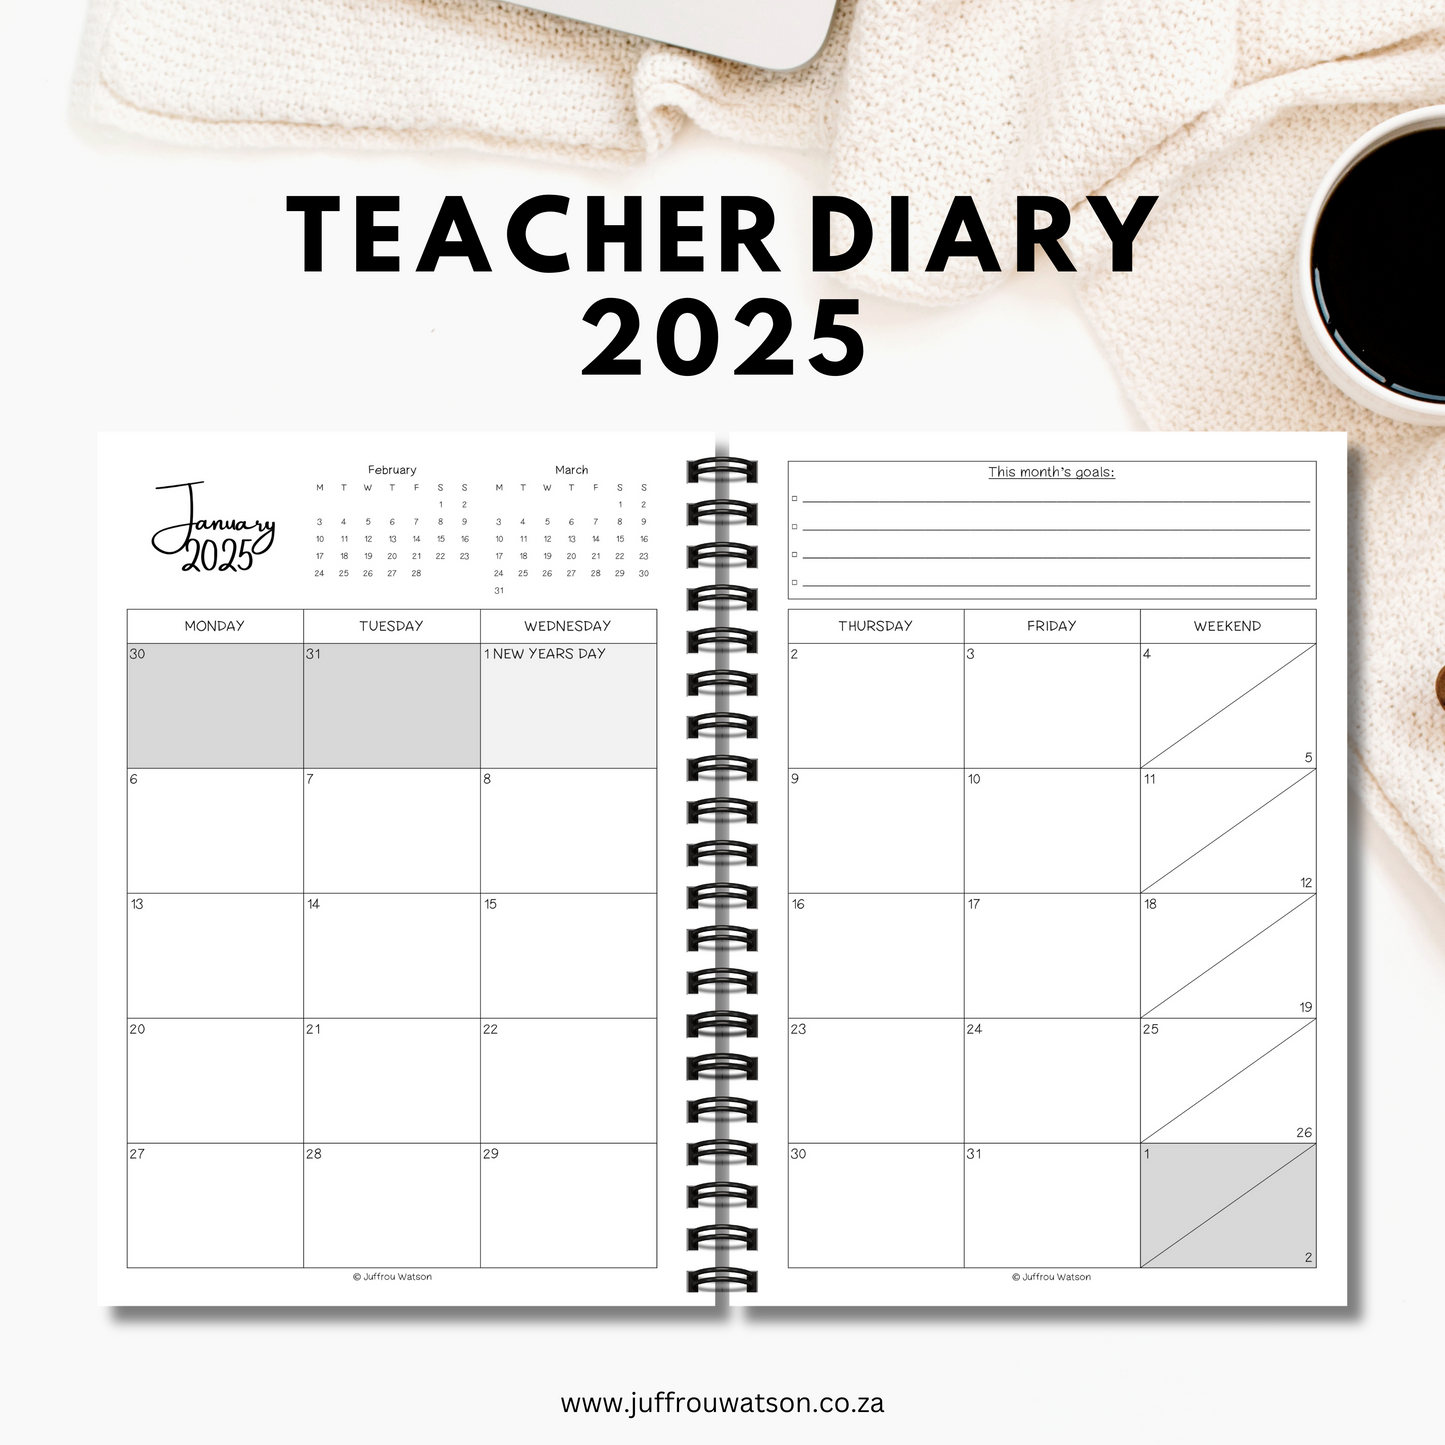 2025 Teacher Diary - Serenity